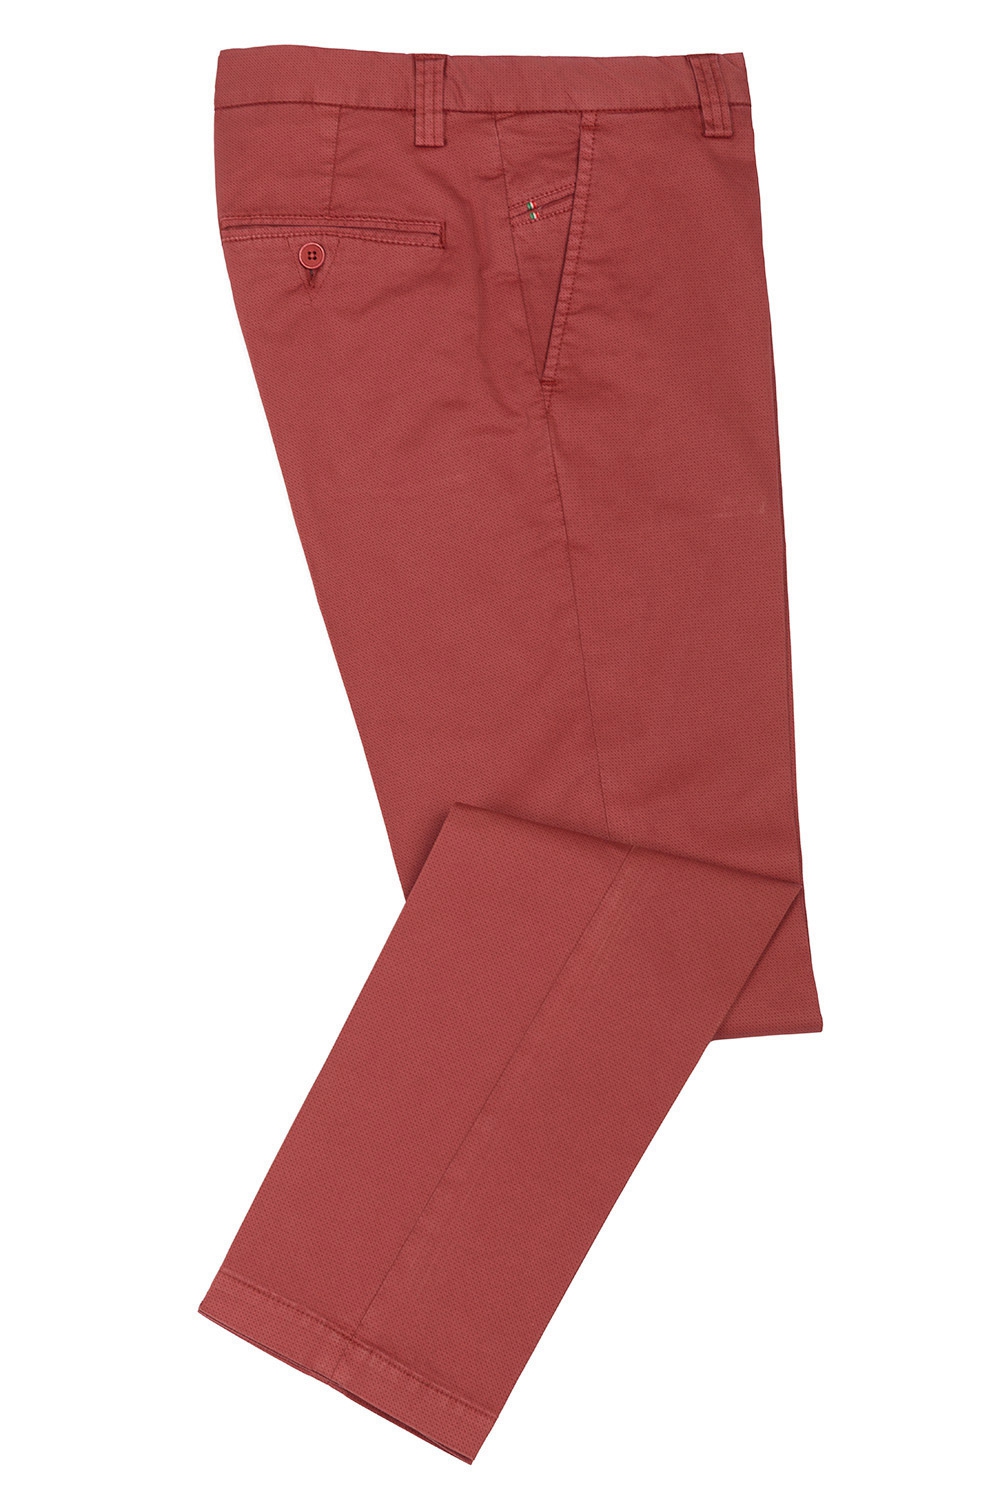 Pantaloni slim rosii print geometric 1